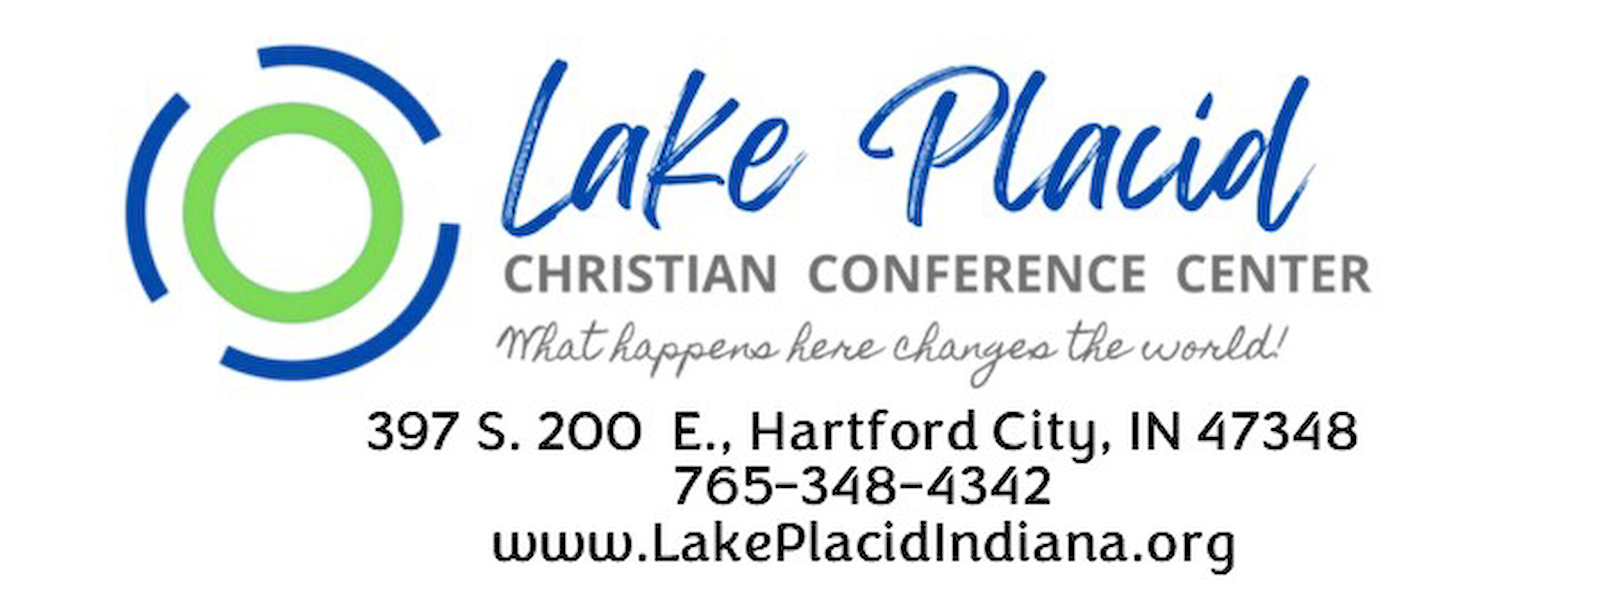 Lake Placid Christian Conference Center